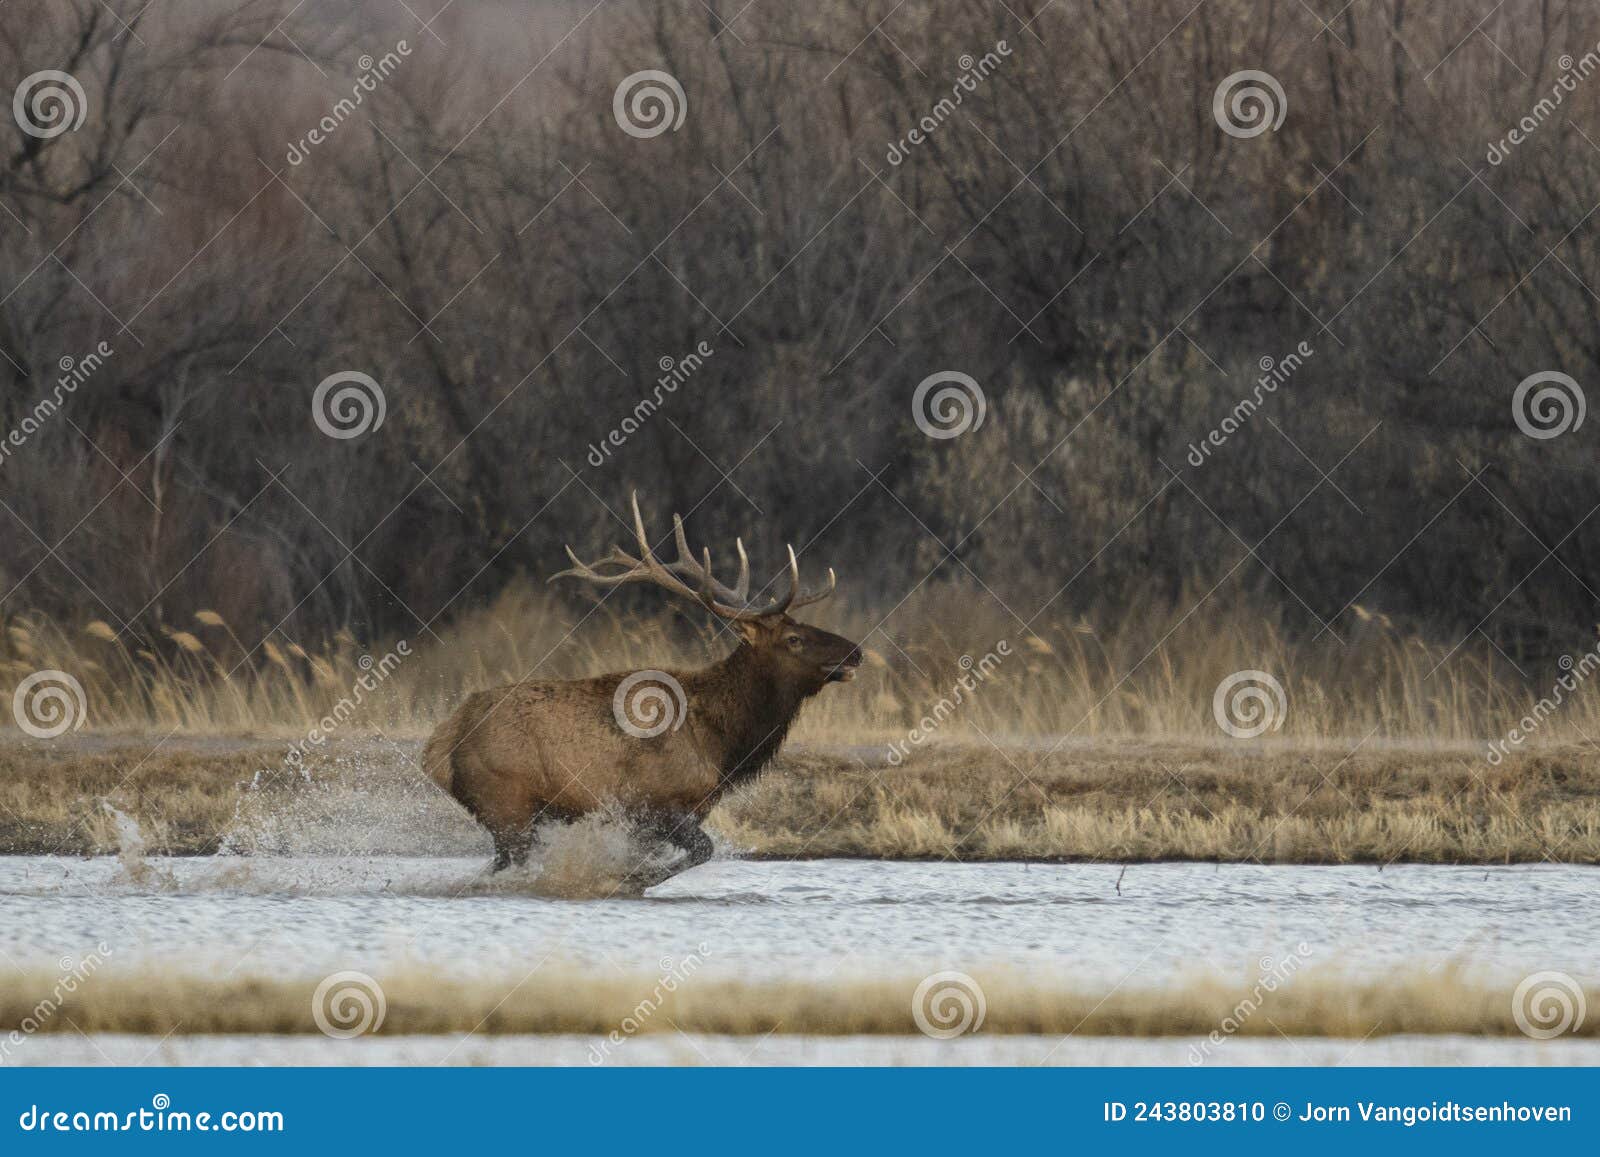 elk at bosque del apache nwr